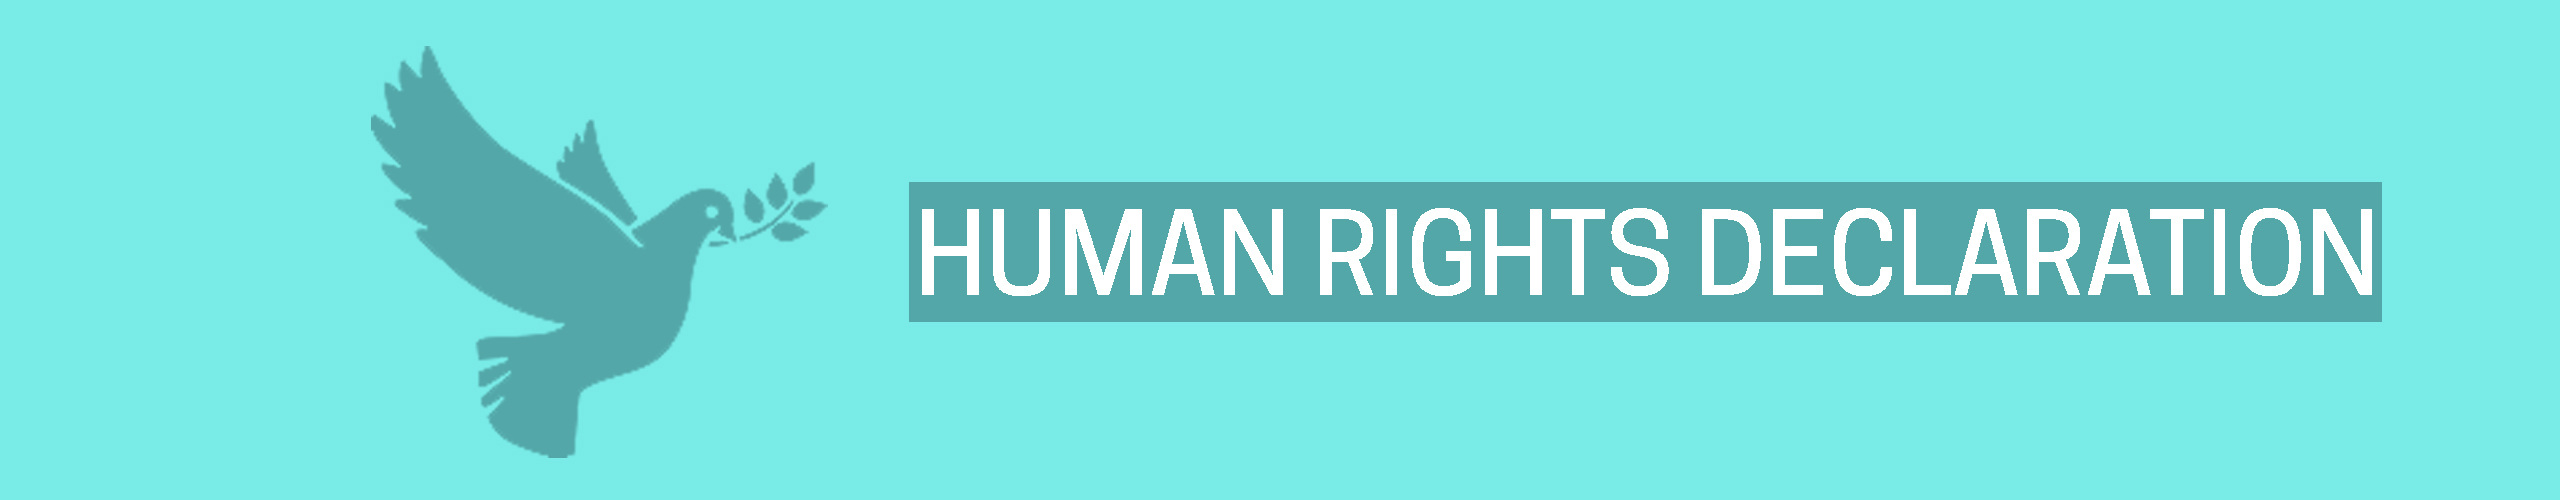 HUMAN RIGHTS DECLARATIONS